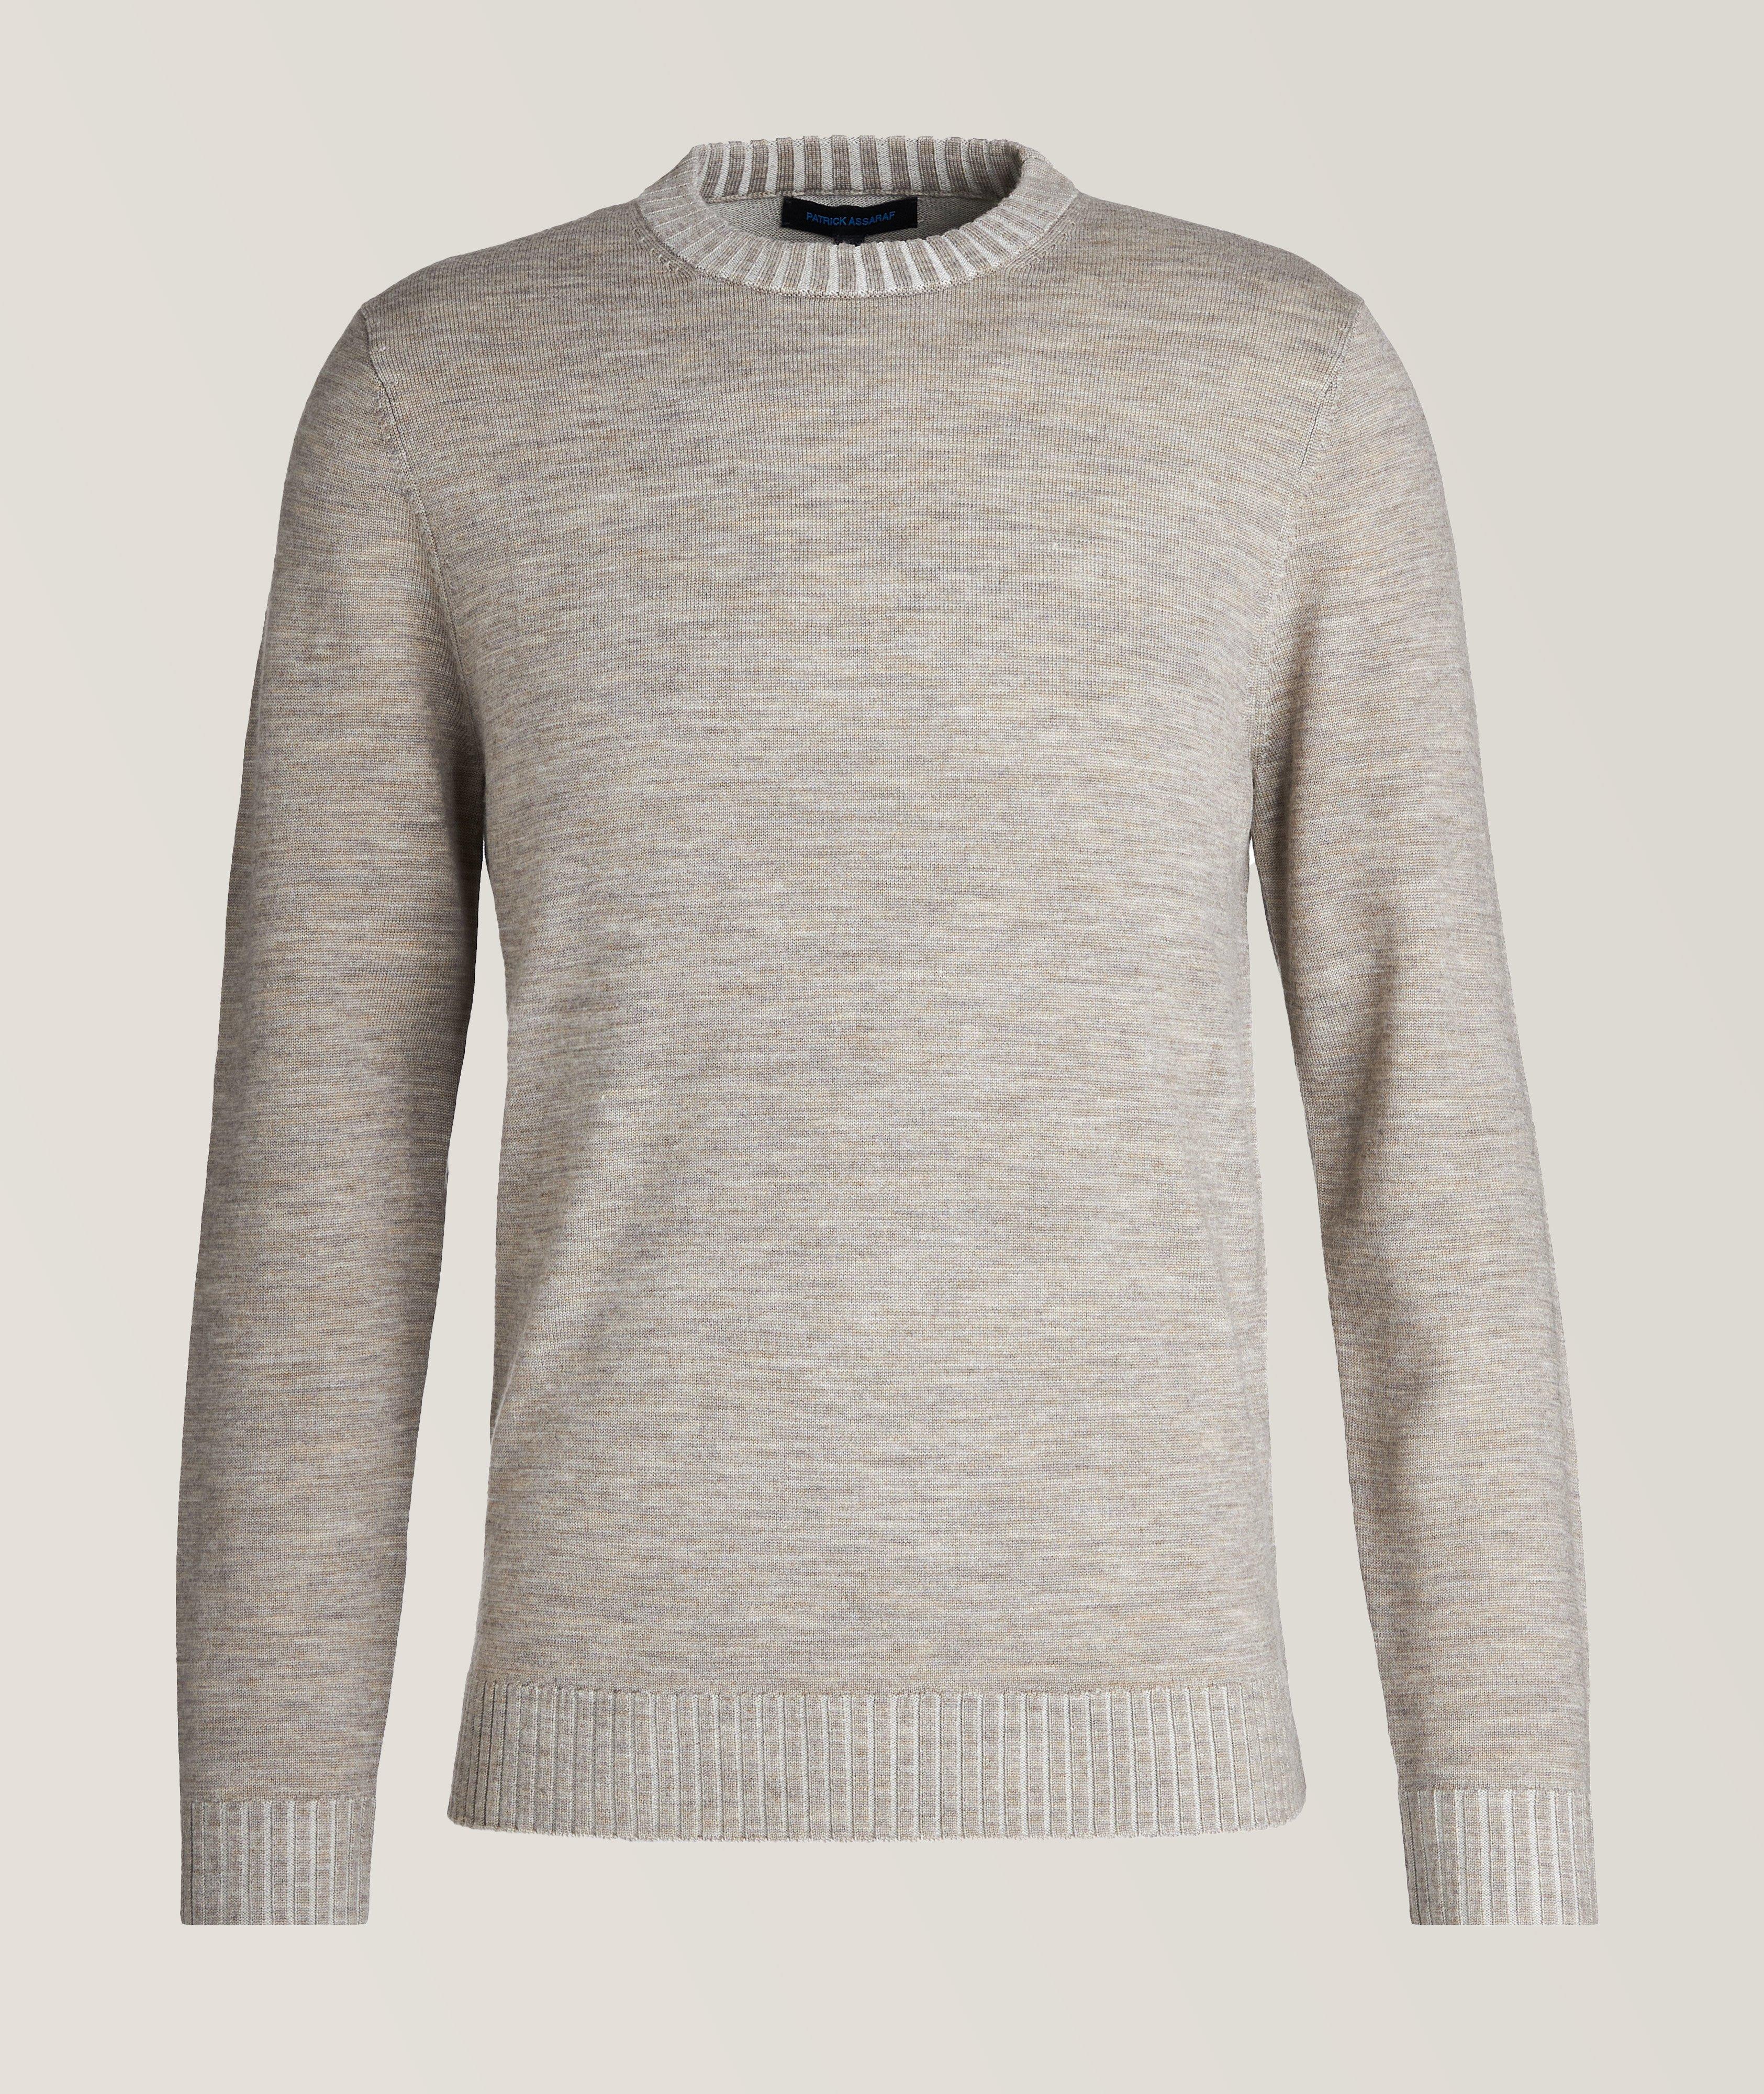 Patrick Assaraf Cashmere Crewneck Sweater | Sweaters & Knits